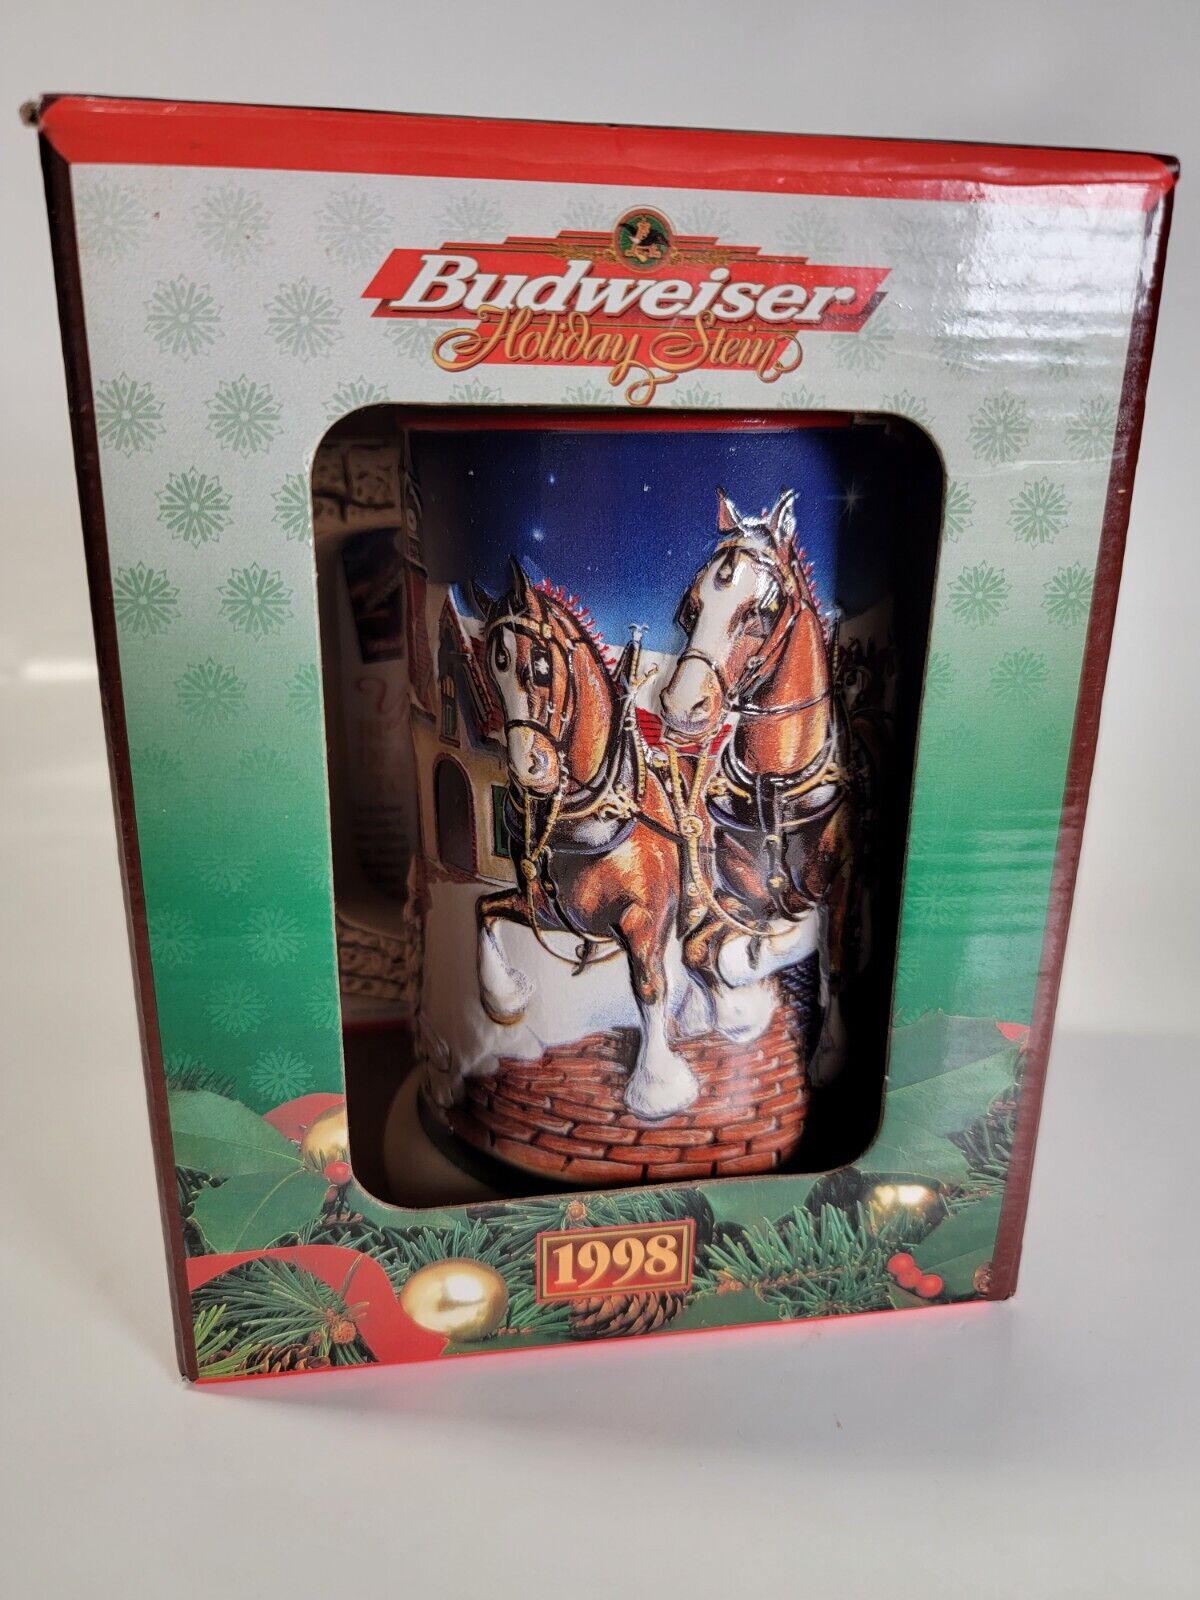 Vintage 1998 Budweiser Holiday Stein Collector\'s Series